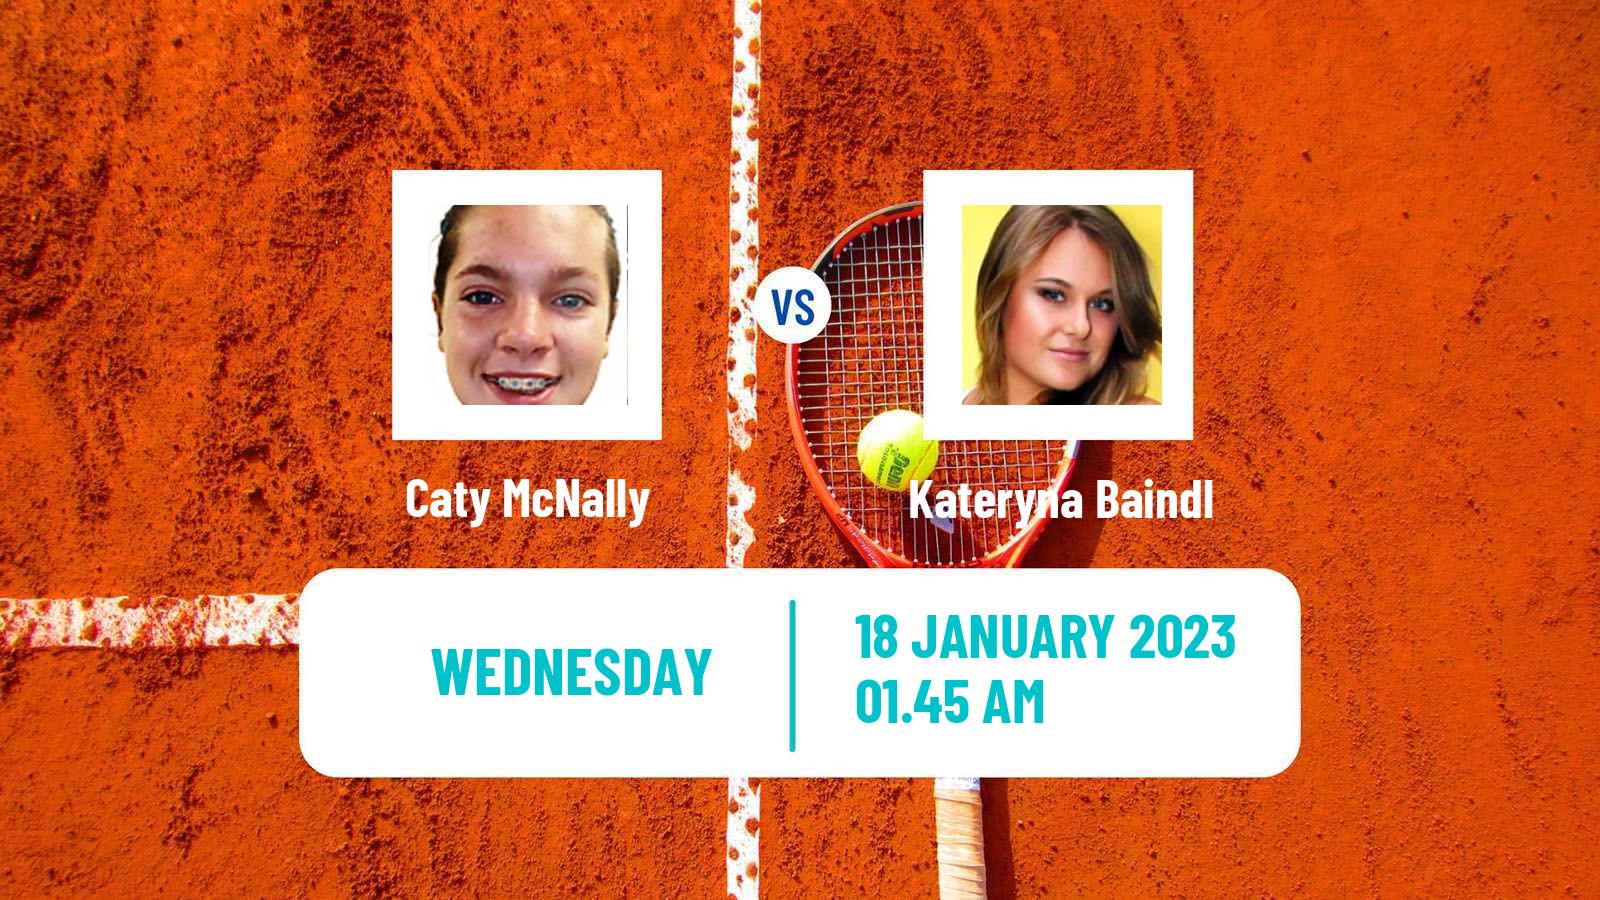 Tennis WTA Australian Open Caty McNally - Kateryna Baindl